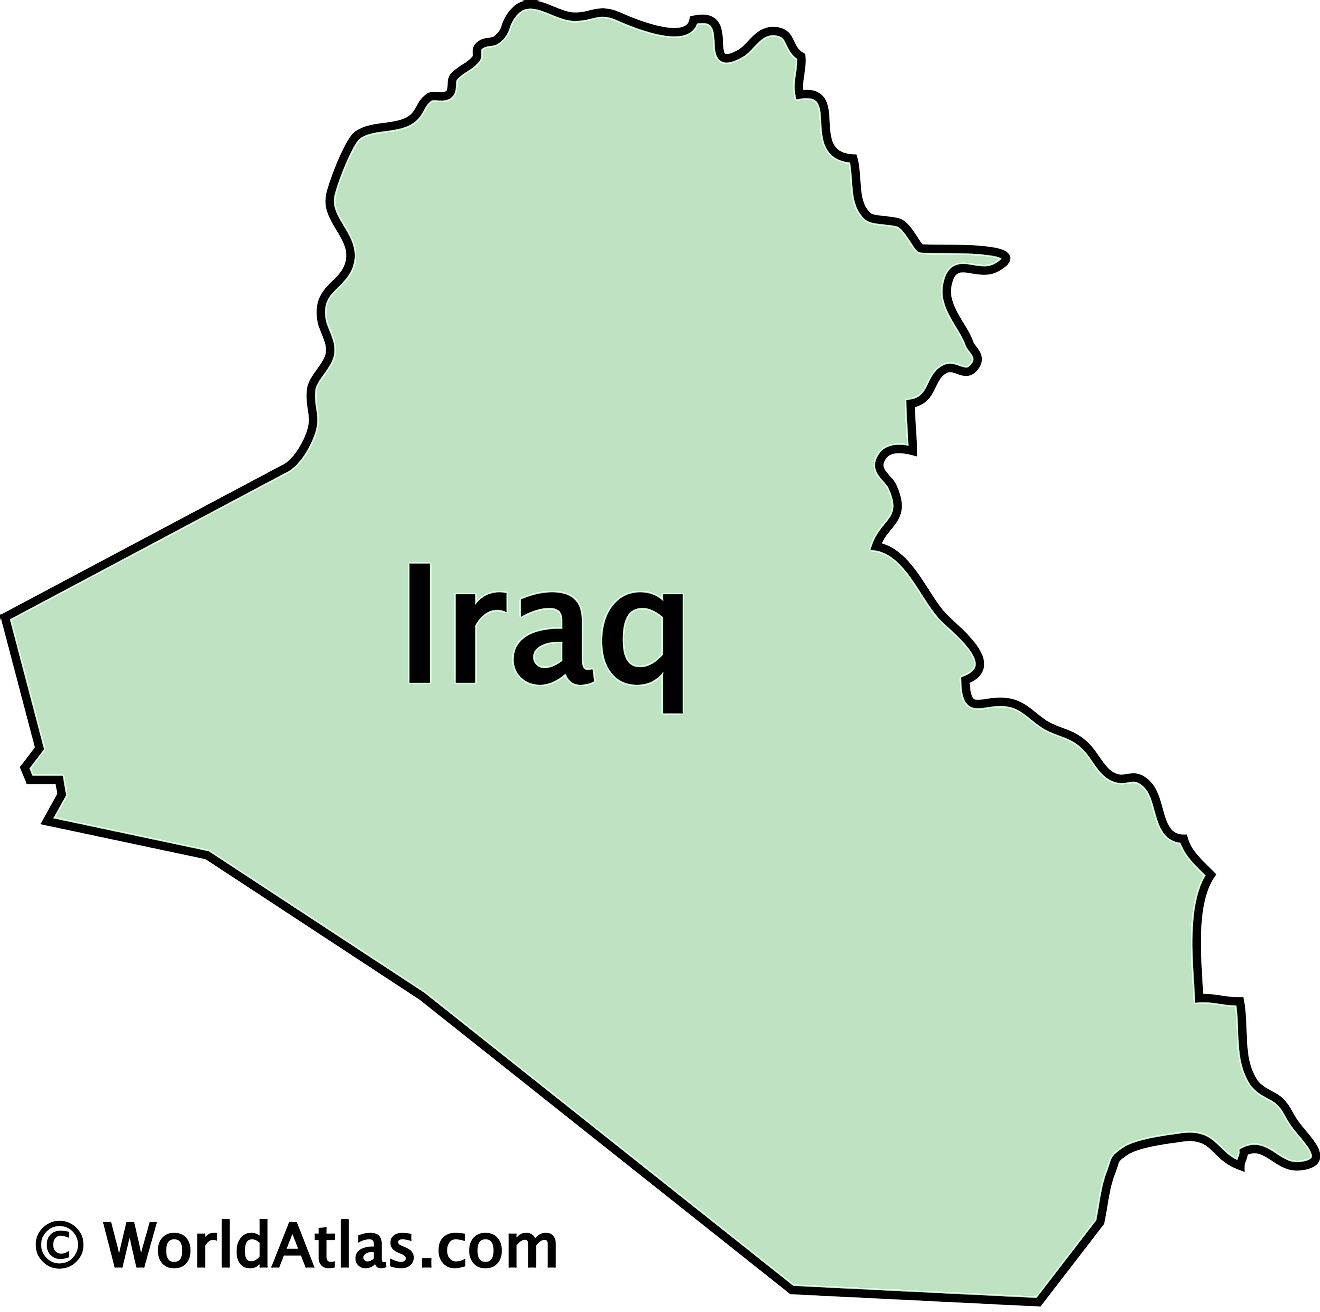 Mapa de contorno de Irak